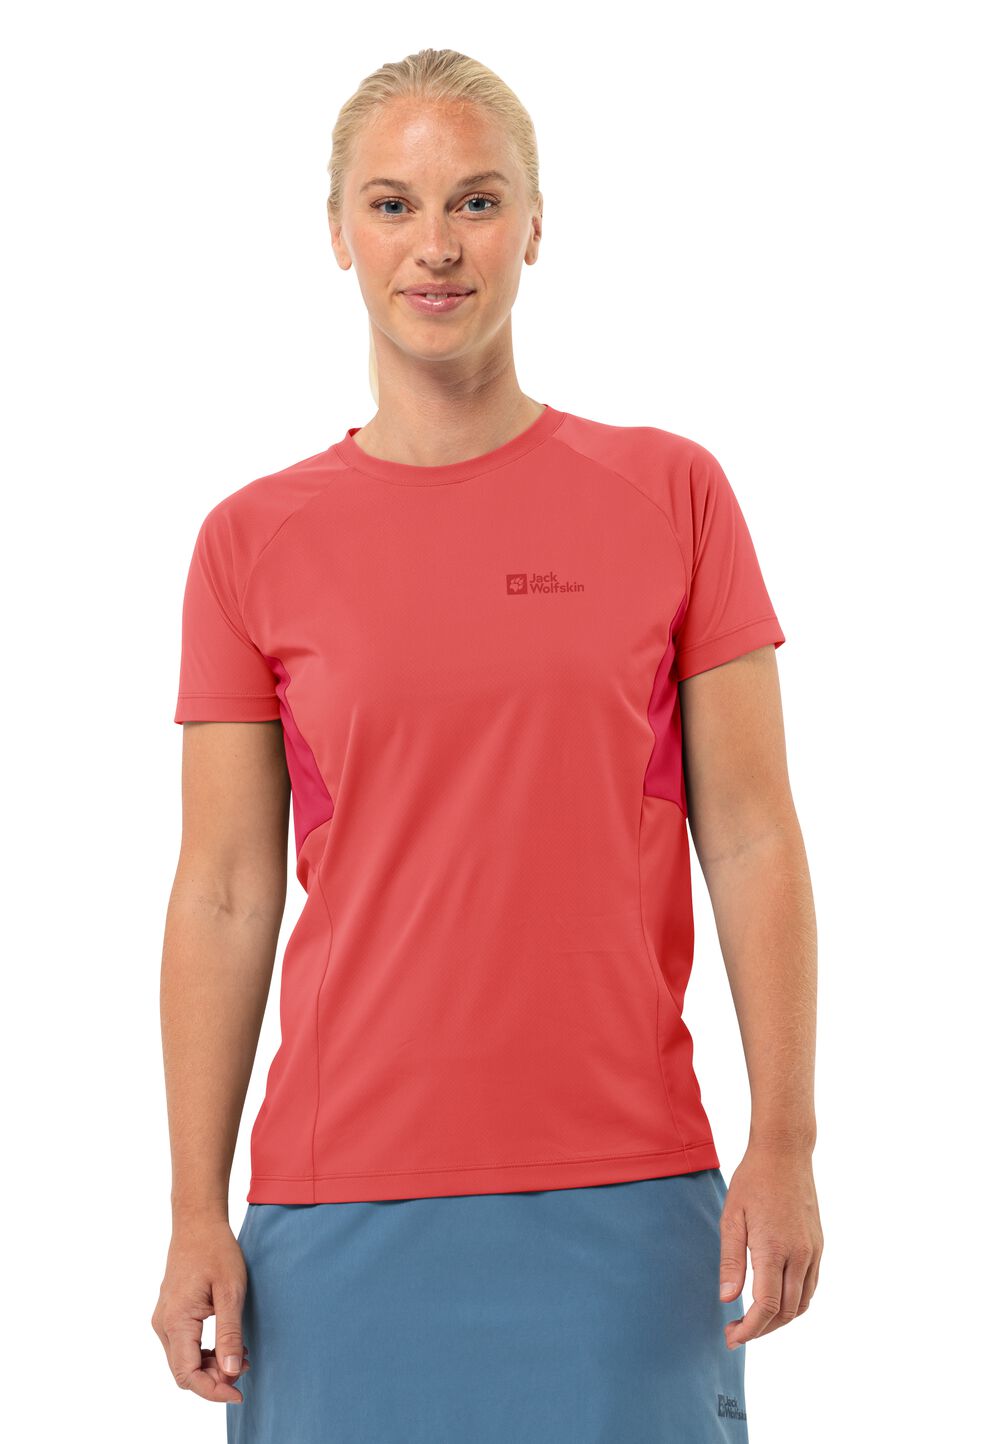 Jack Wolfskin Narrows T-Shirt Women Functioneel shirt Dames L rood vibrant red